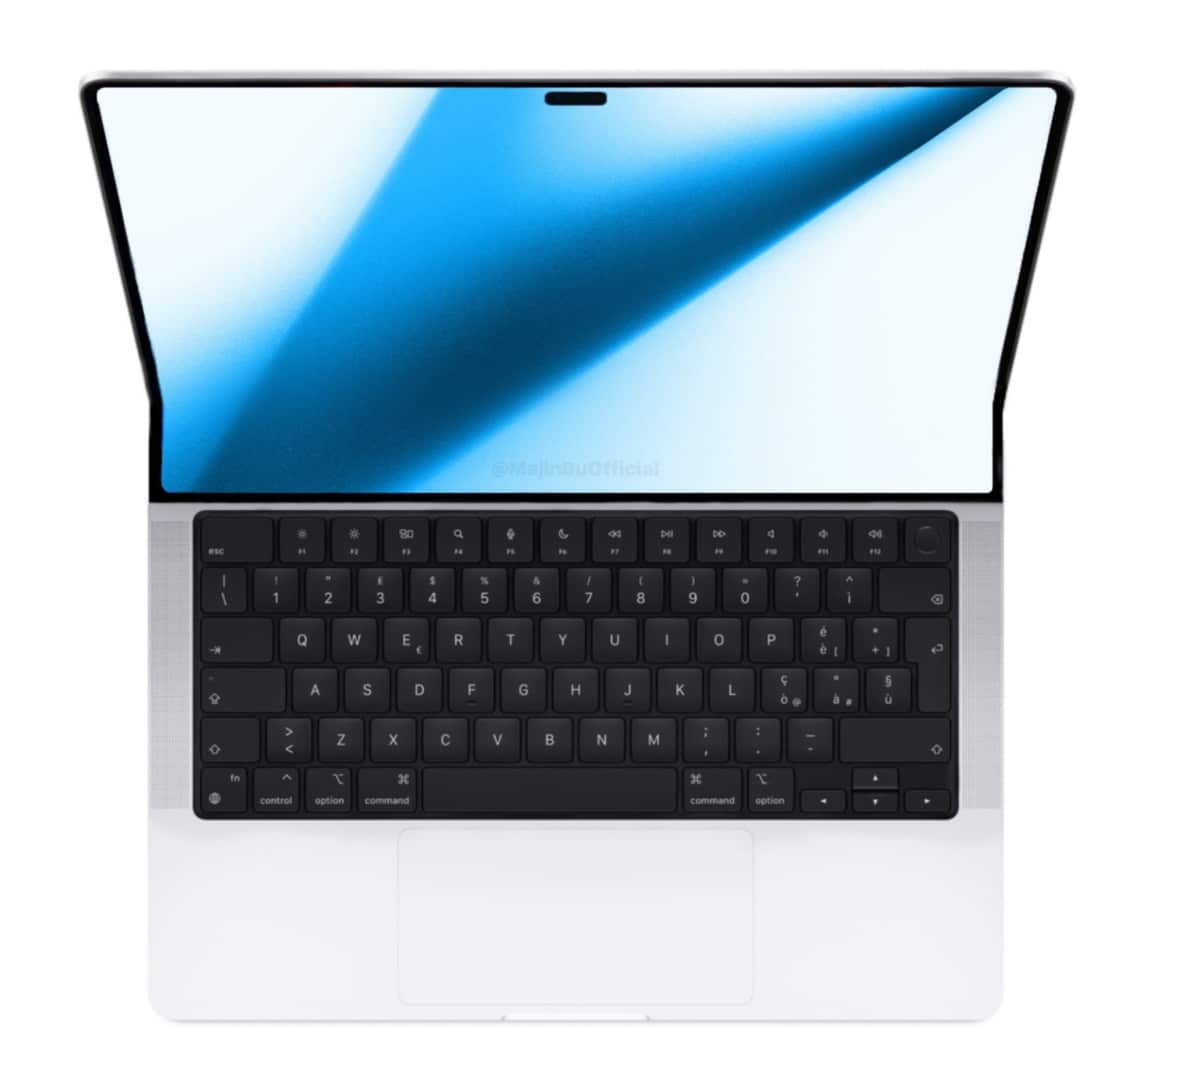 folddable MacBook Pro concept